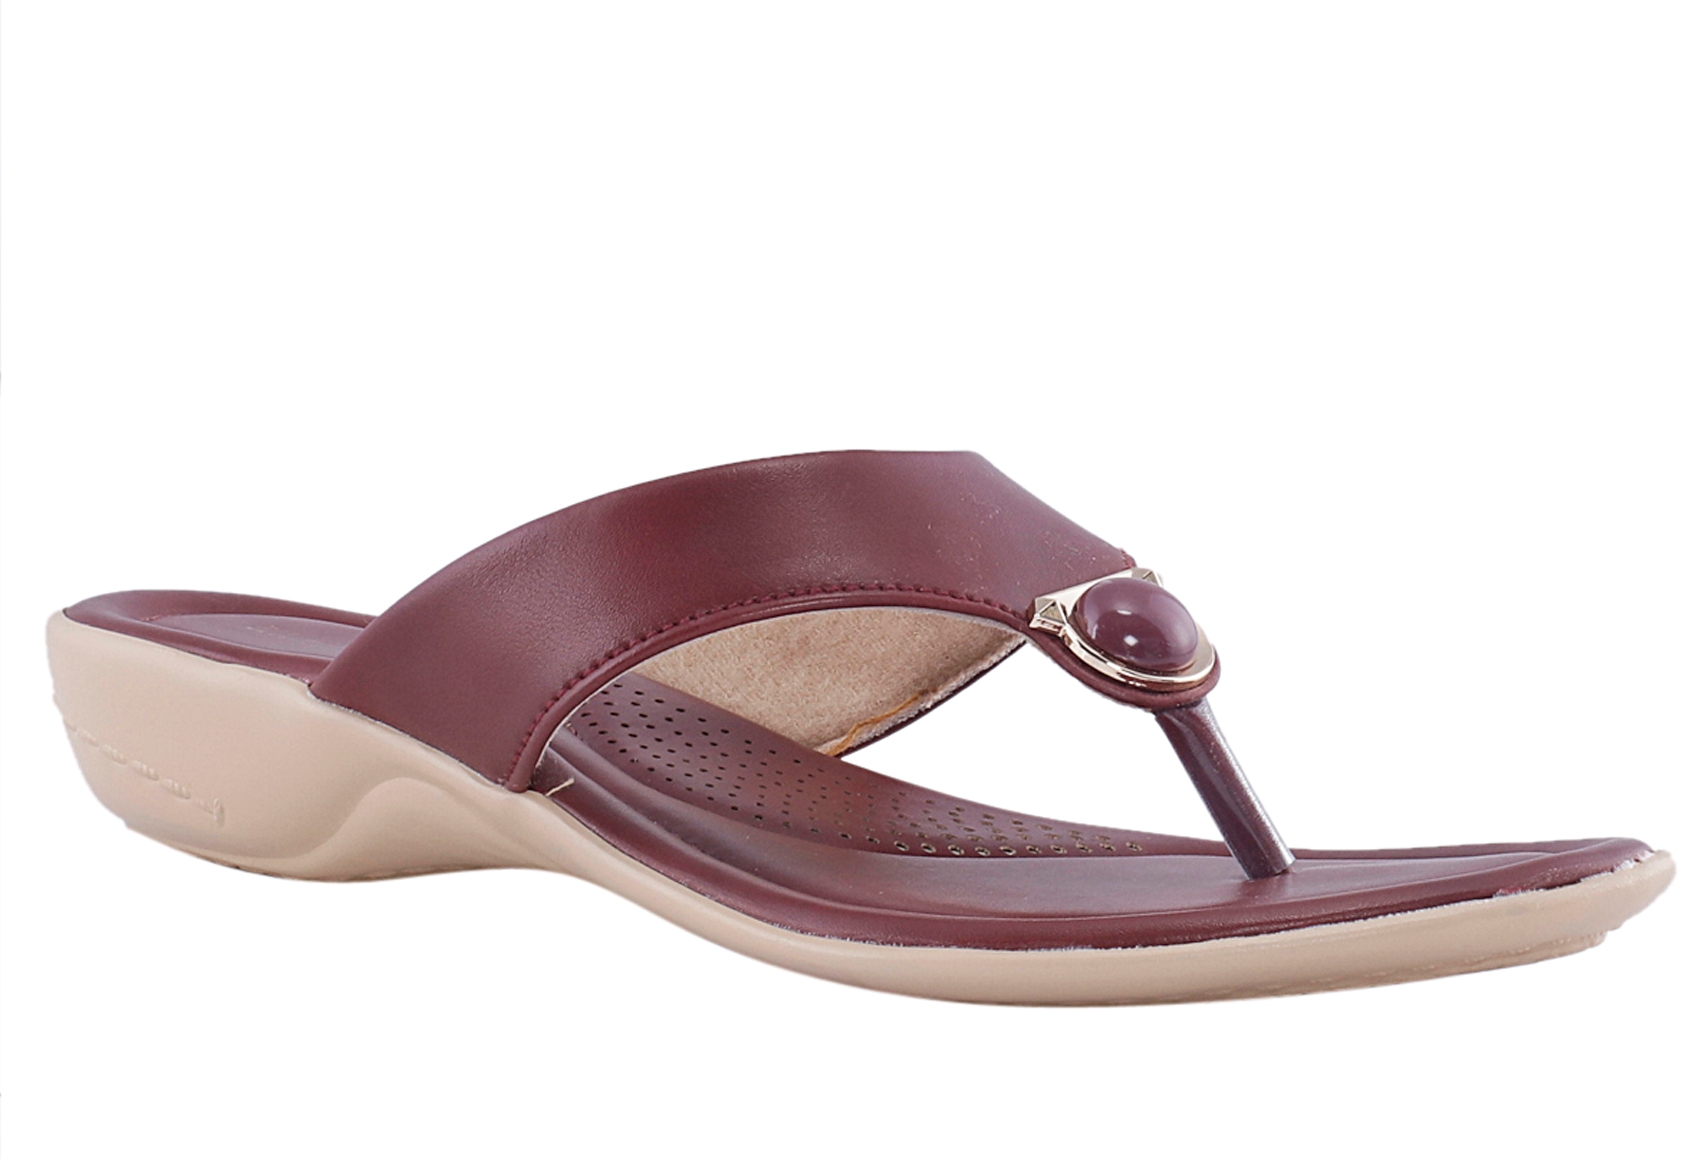 Khadim | Khadim's Synthetic Maroon Casual Flats Sandal For Women